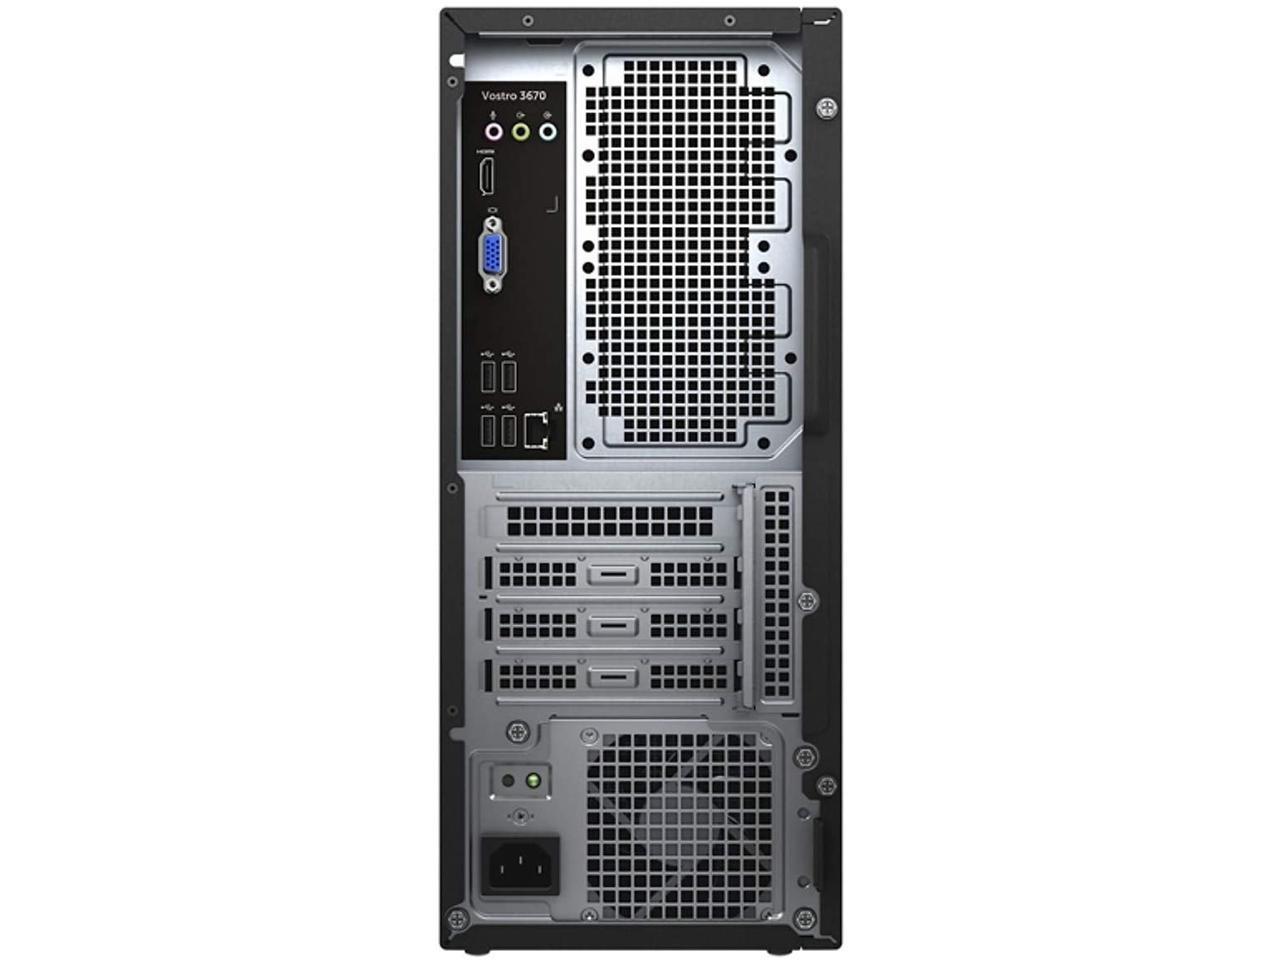 Newest Dell Vostro 3000 Premium Business Desktop, 9th Gen Intel 6-Core i5-9400, 8GB RAM, 256GB PCIe SSD Boot + 2TB HDD, DVD-RW, WIFI, Bluetooth, VGA Port, Windows 10 Pro